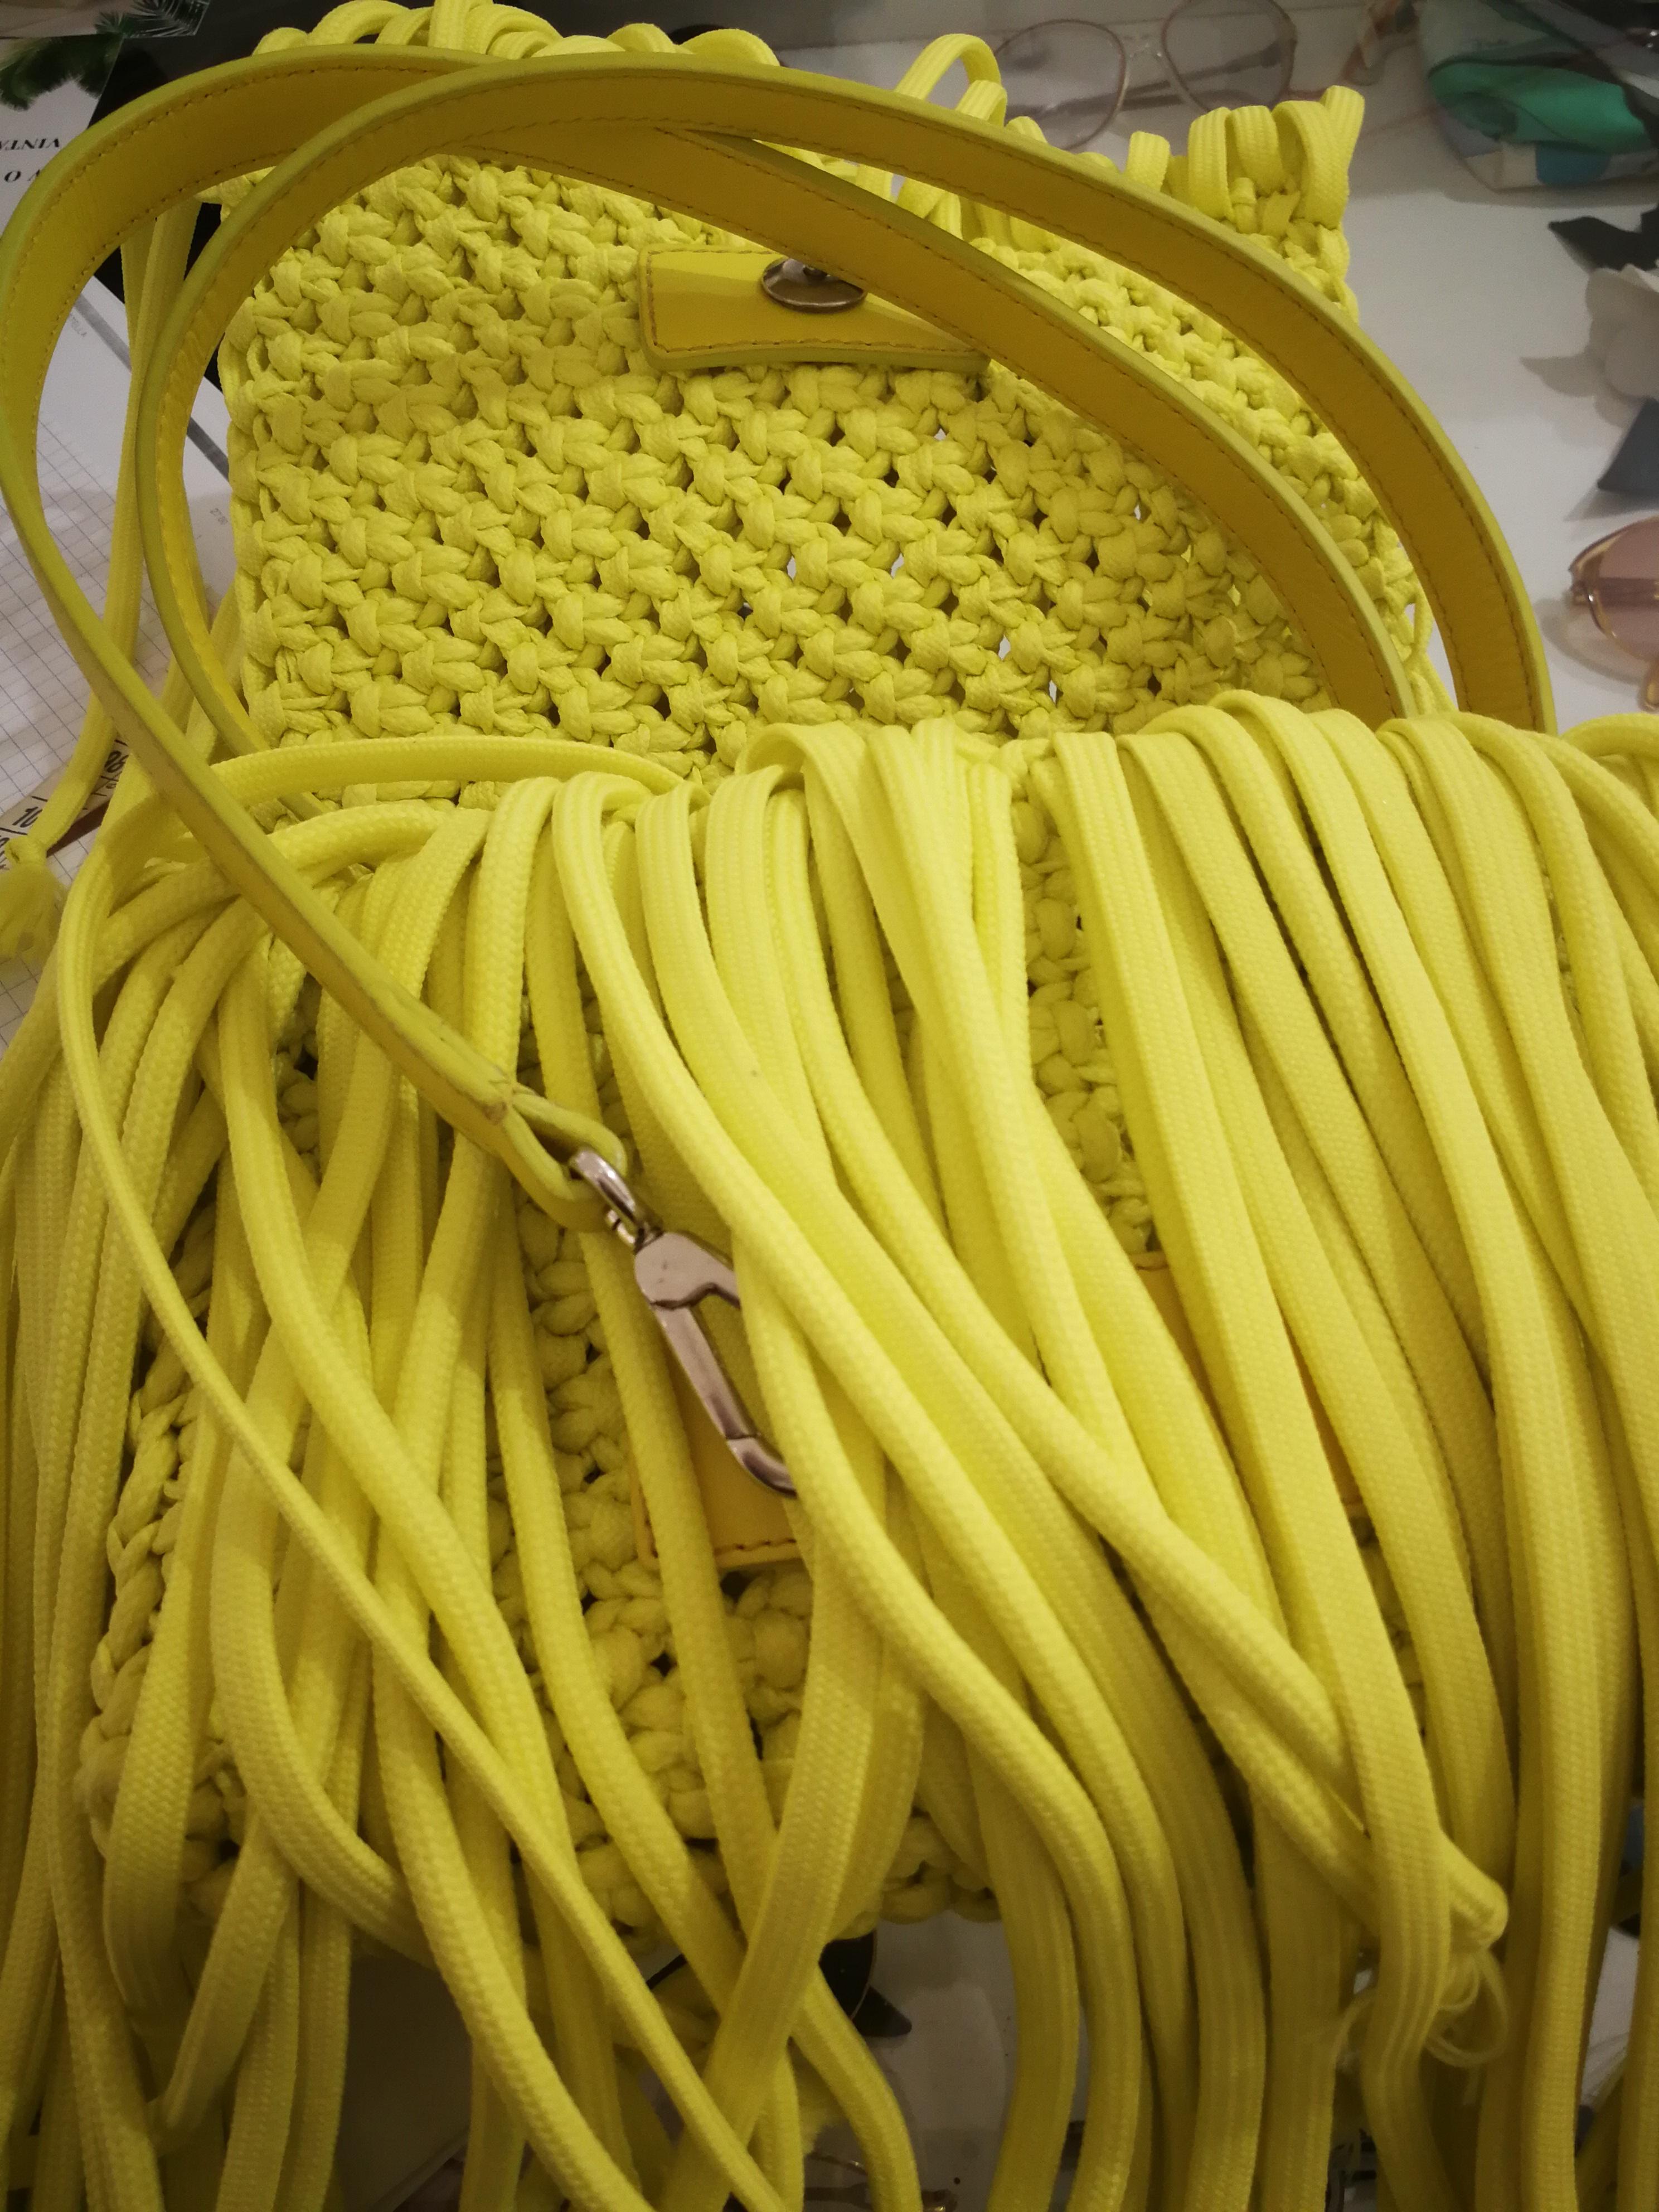 Emilio Pucci Yellow Fringes Shoulder Bag

Totally made in italy

inside a removable shoulder strap

Bag Measurements: 21 cm * 18 cm * 5 cm